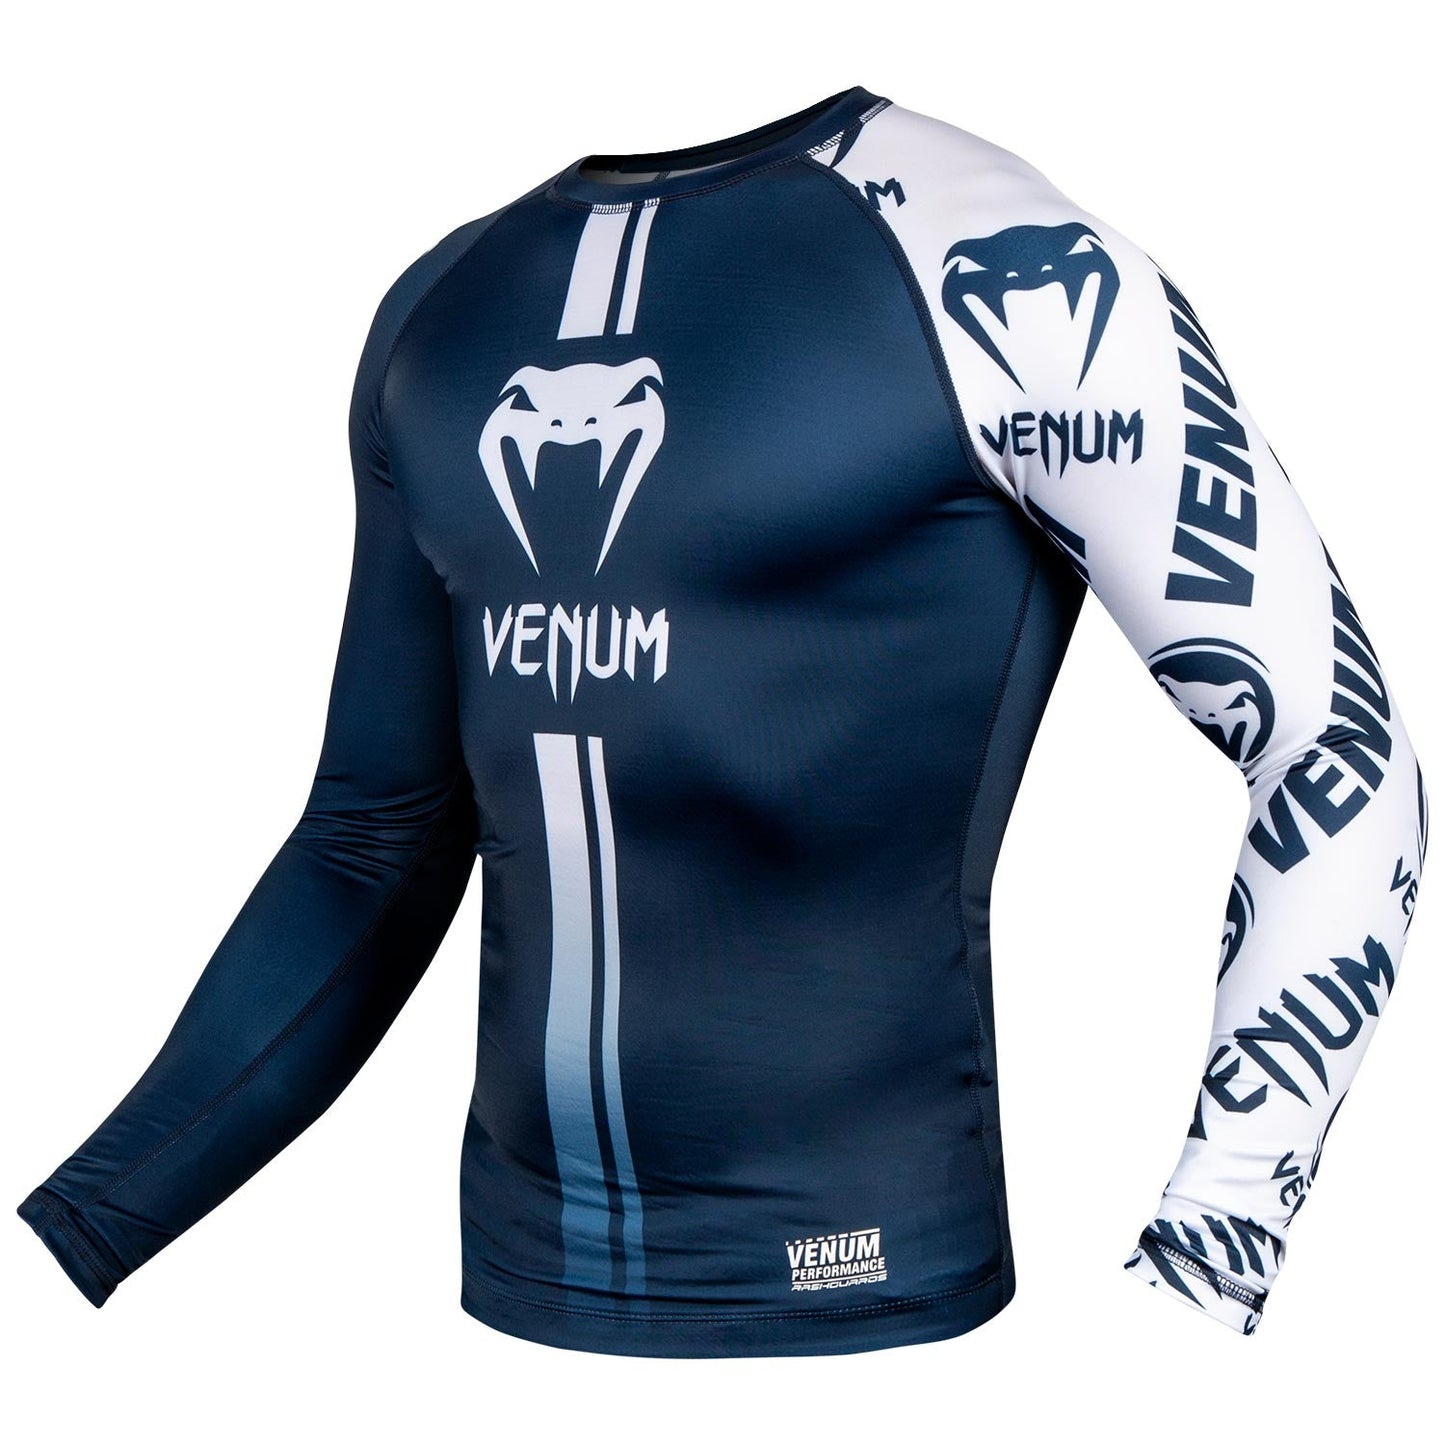 Venum Logos Rashguard - Long Sleeves - Navy Blue/White